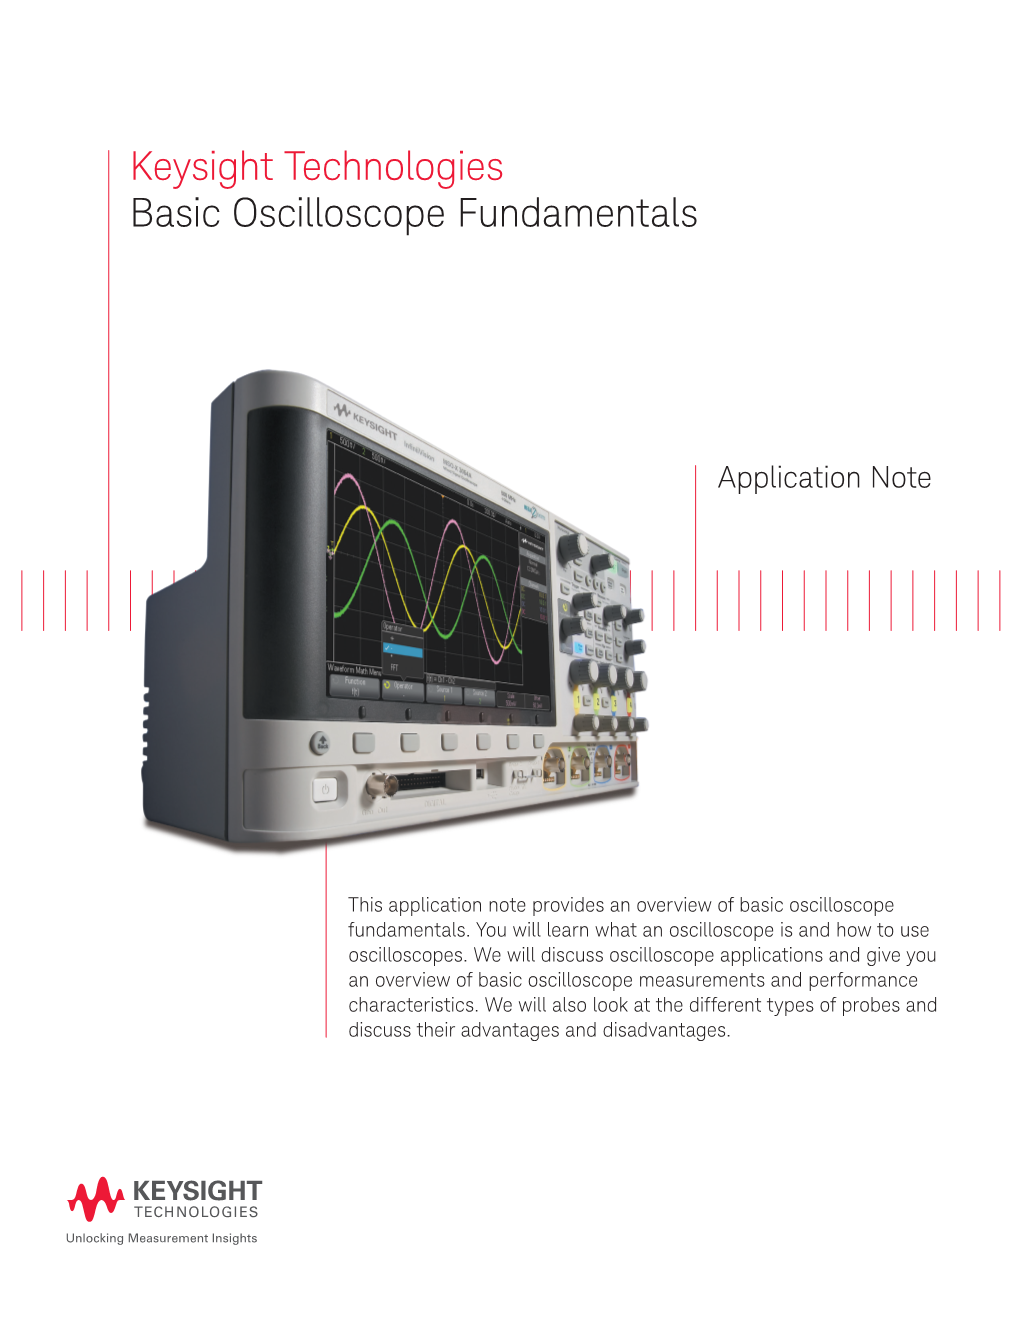 Keysight Technologies Basic Oscilloscope Fundamentals